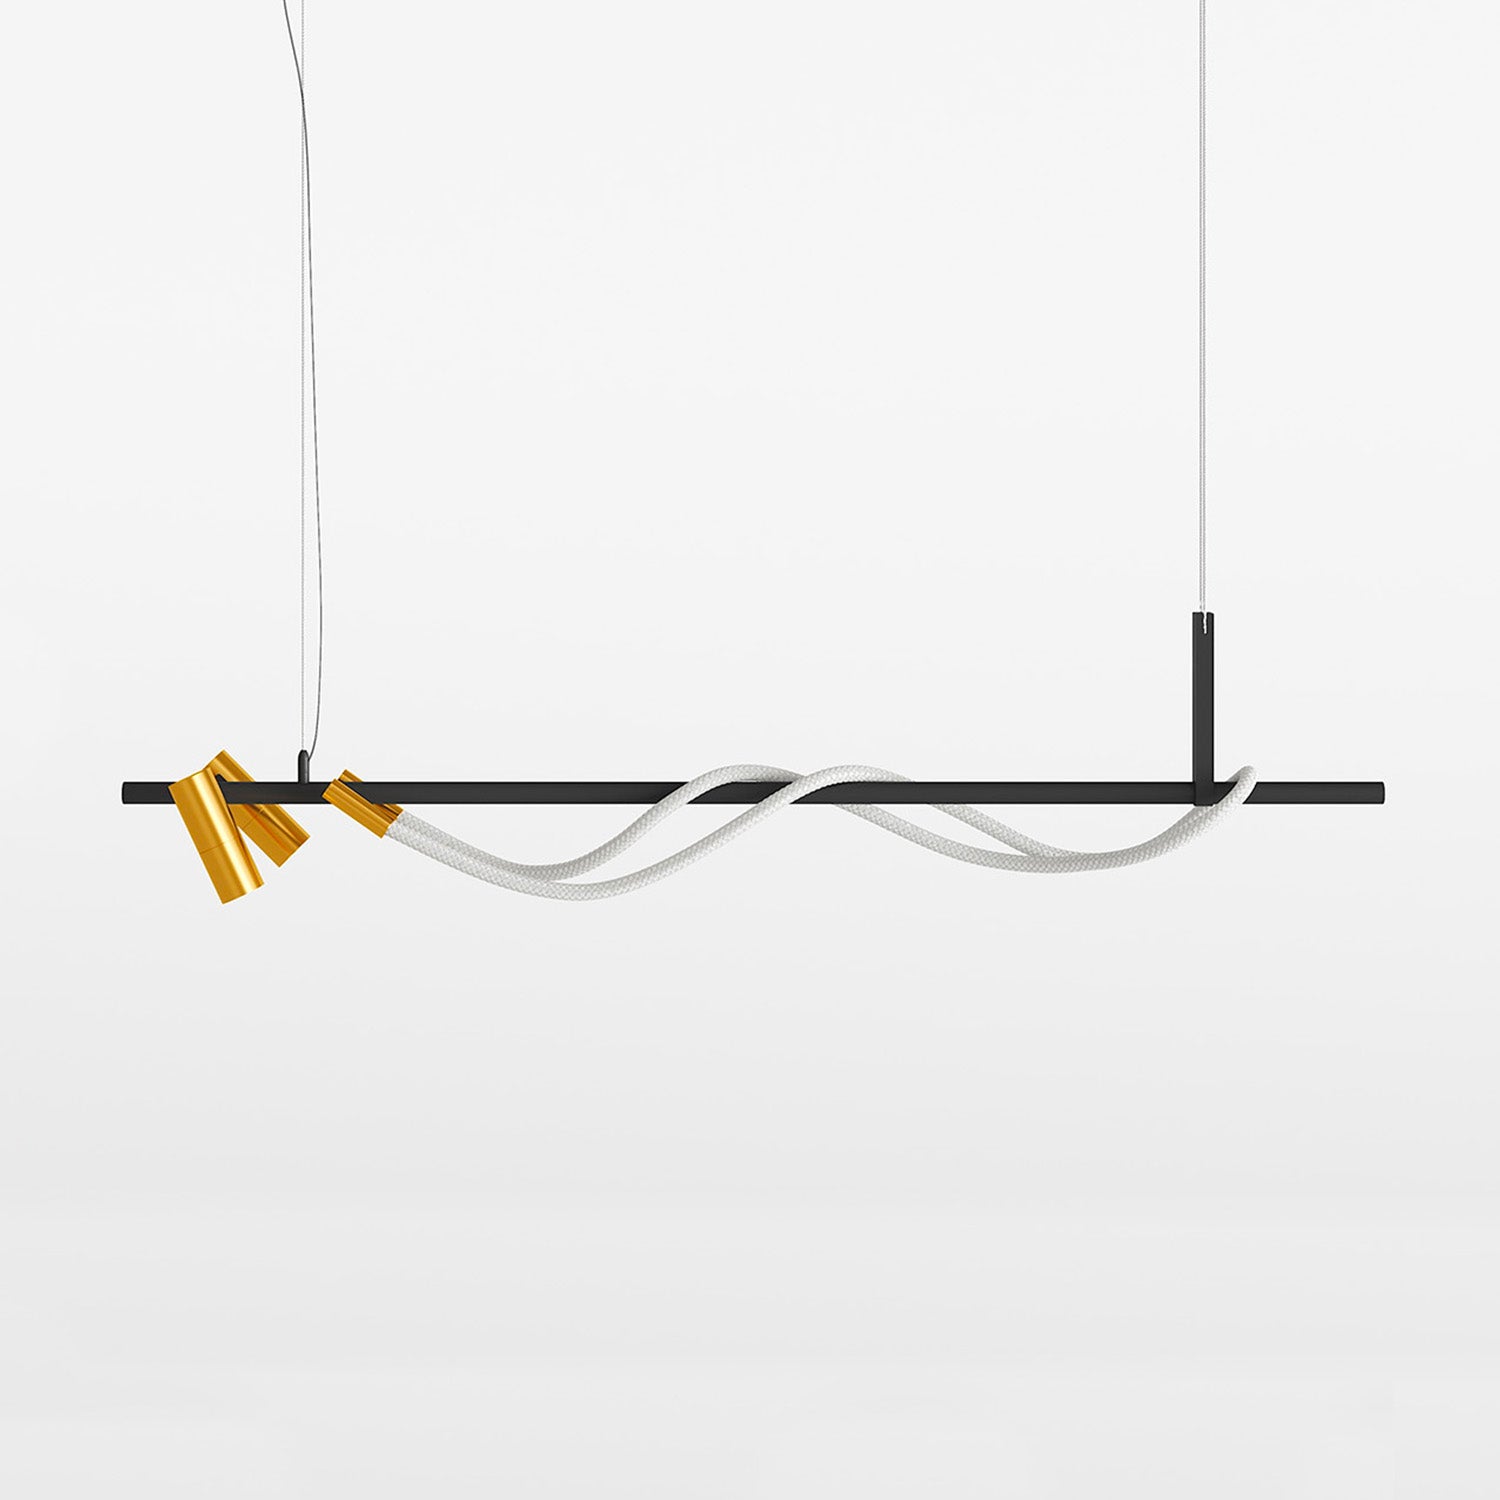 TAU – Integrierte flexible LED-Röhrenaufhängung, schwarz-goldenes Design